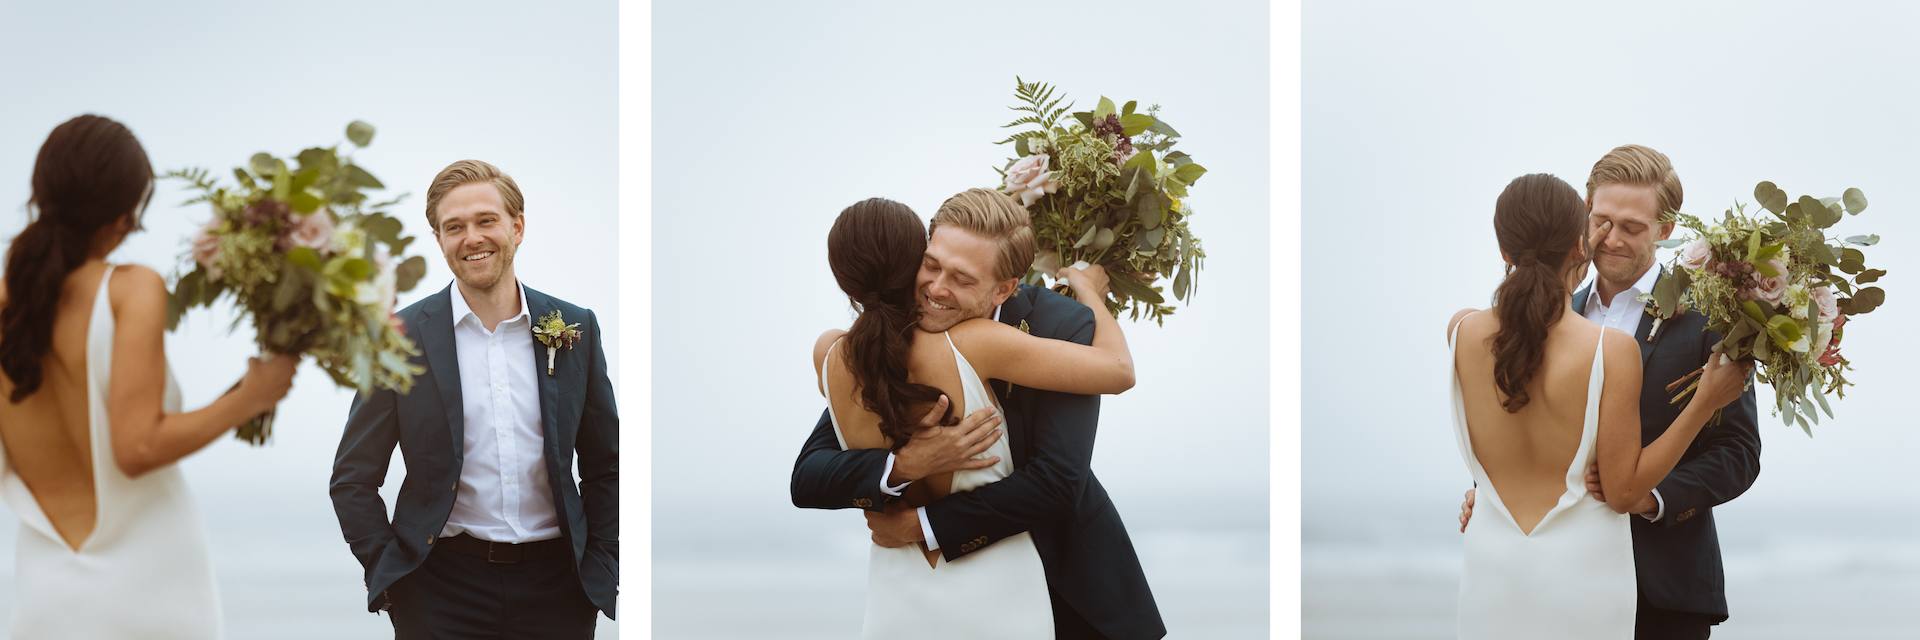 Tofino Wedding Photographers - Image 12